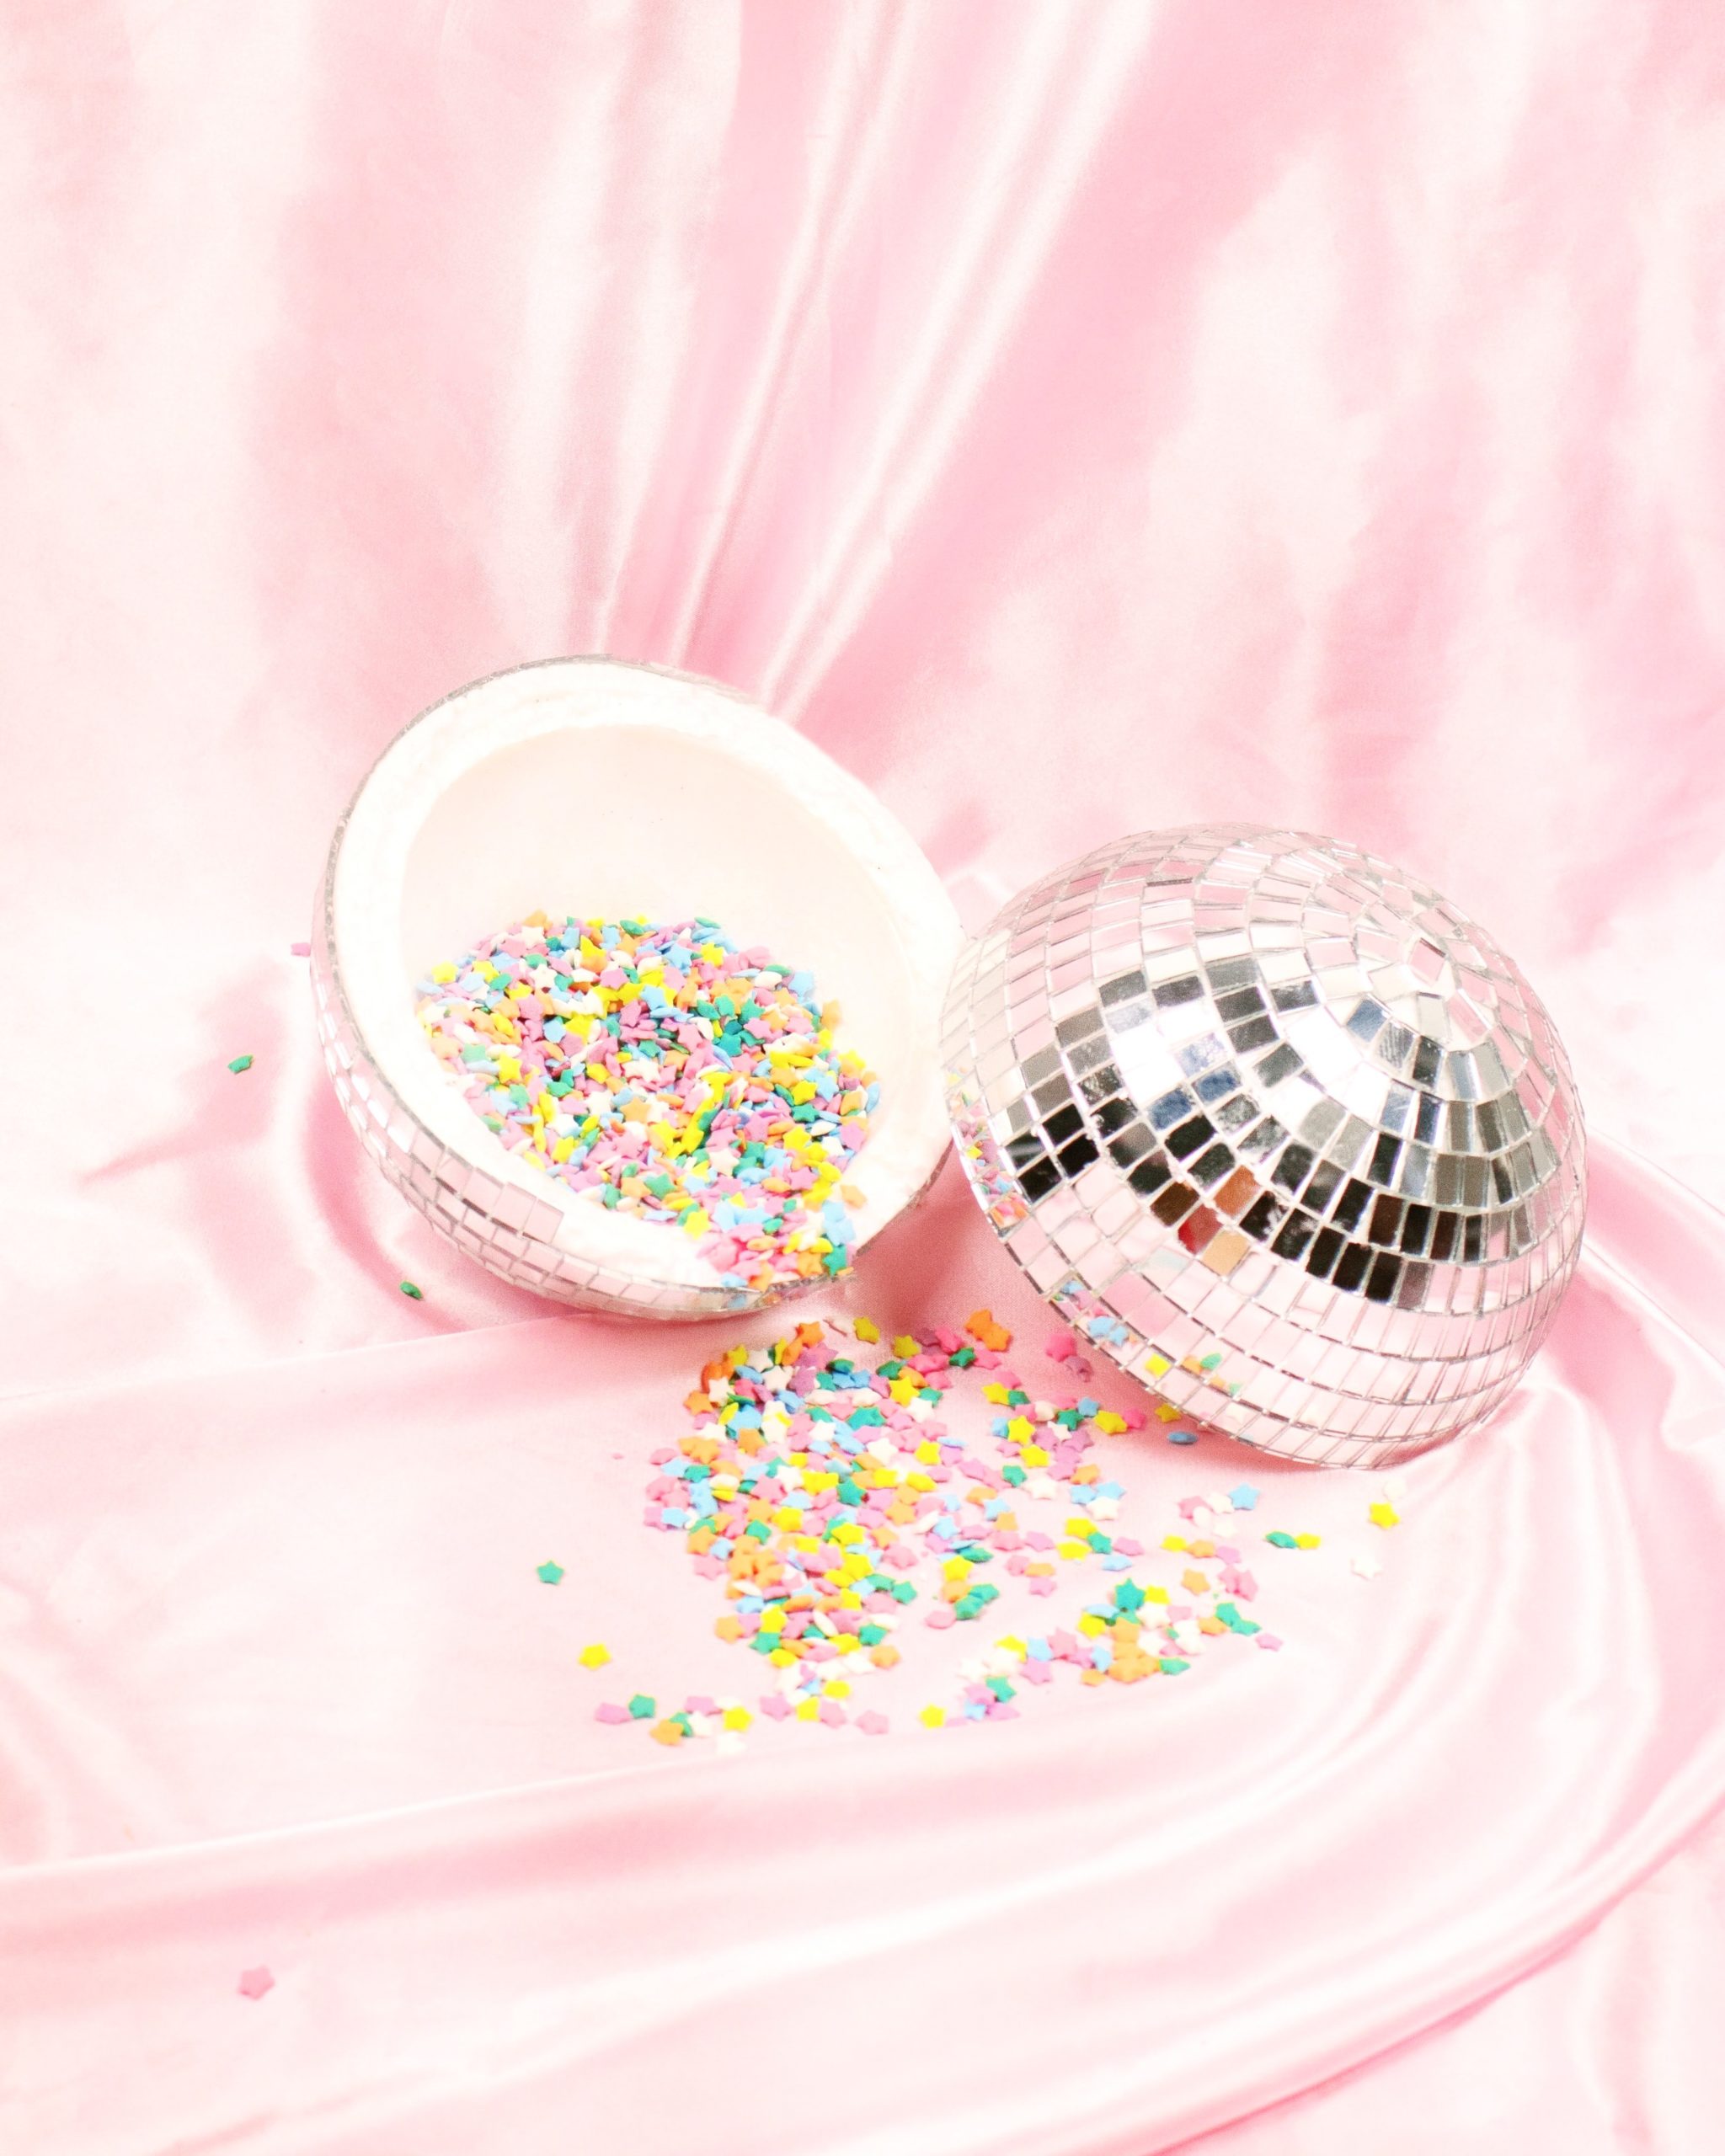 <img src="disco.jpg" alt="Disco ball with sprinkles"/> 